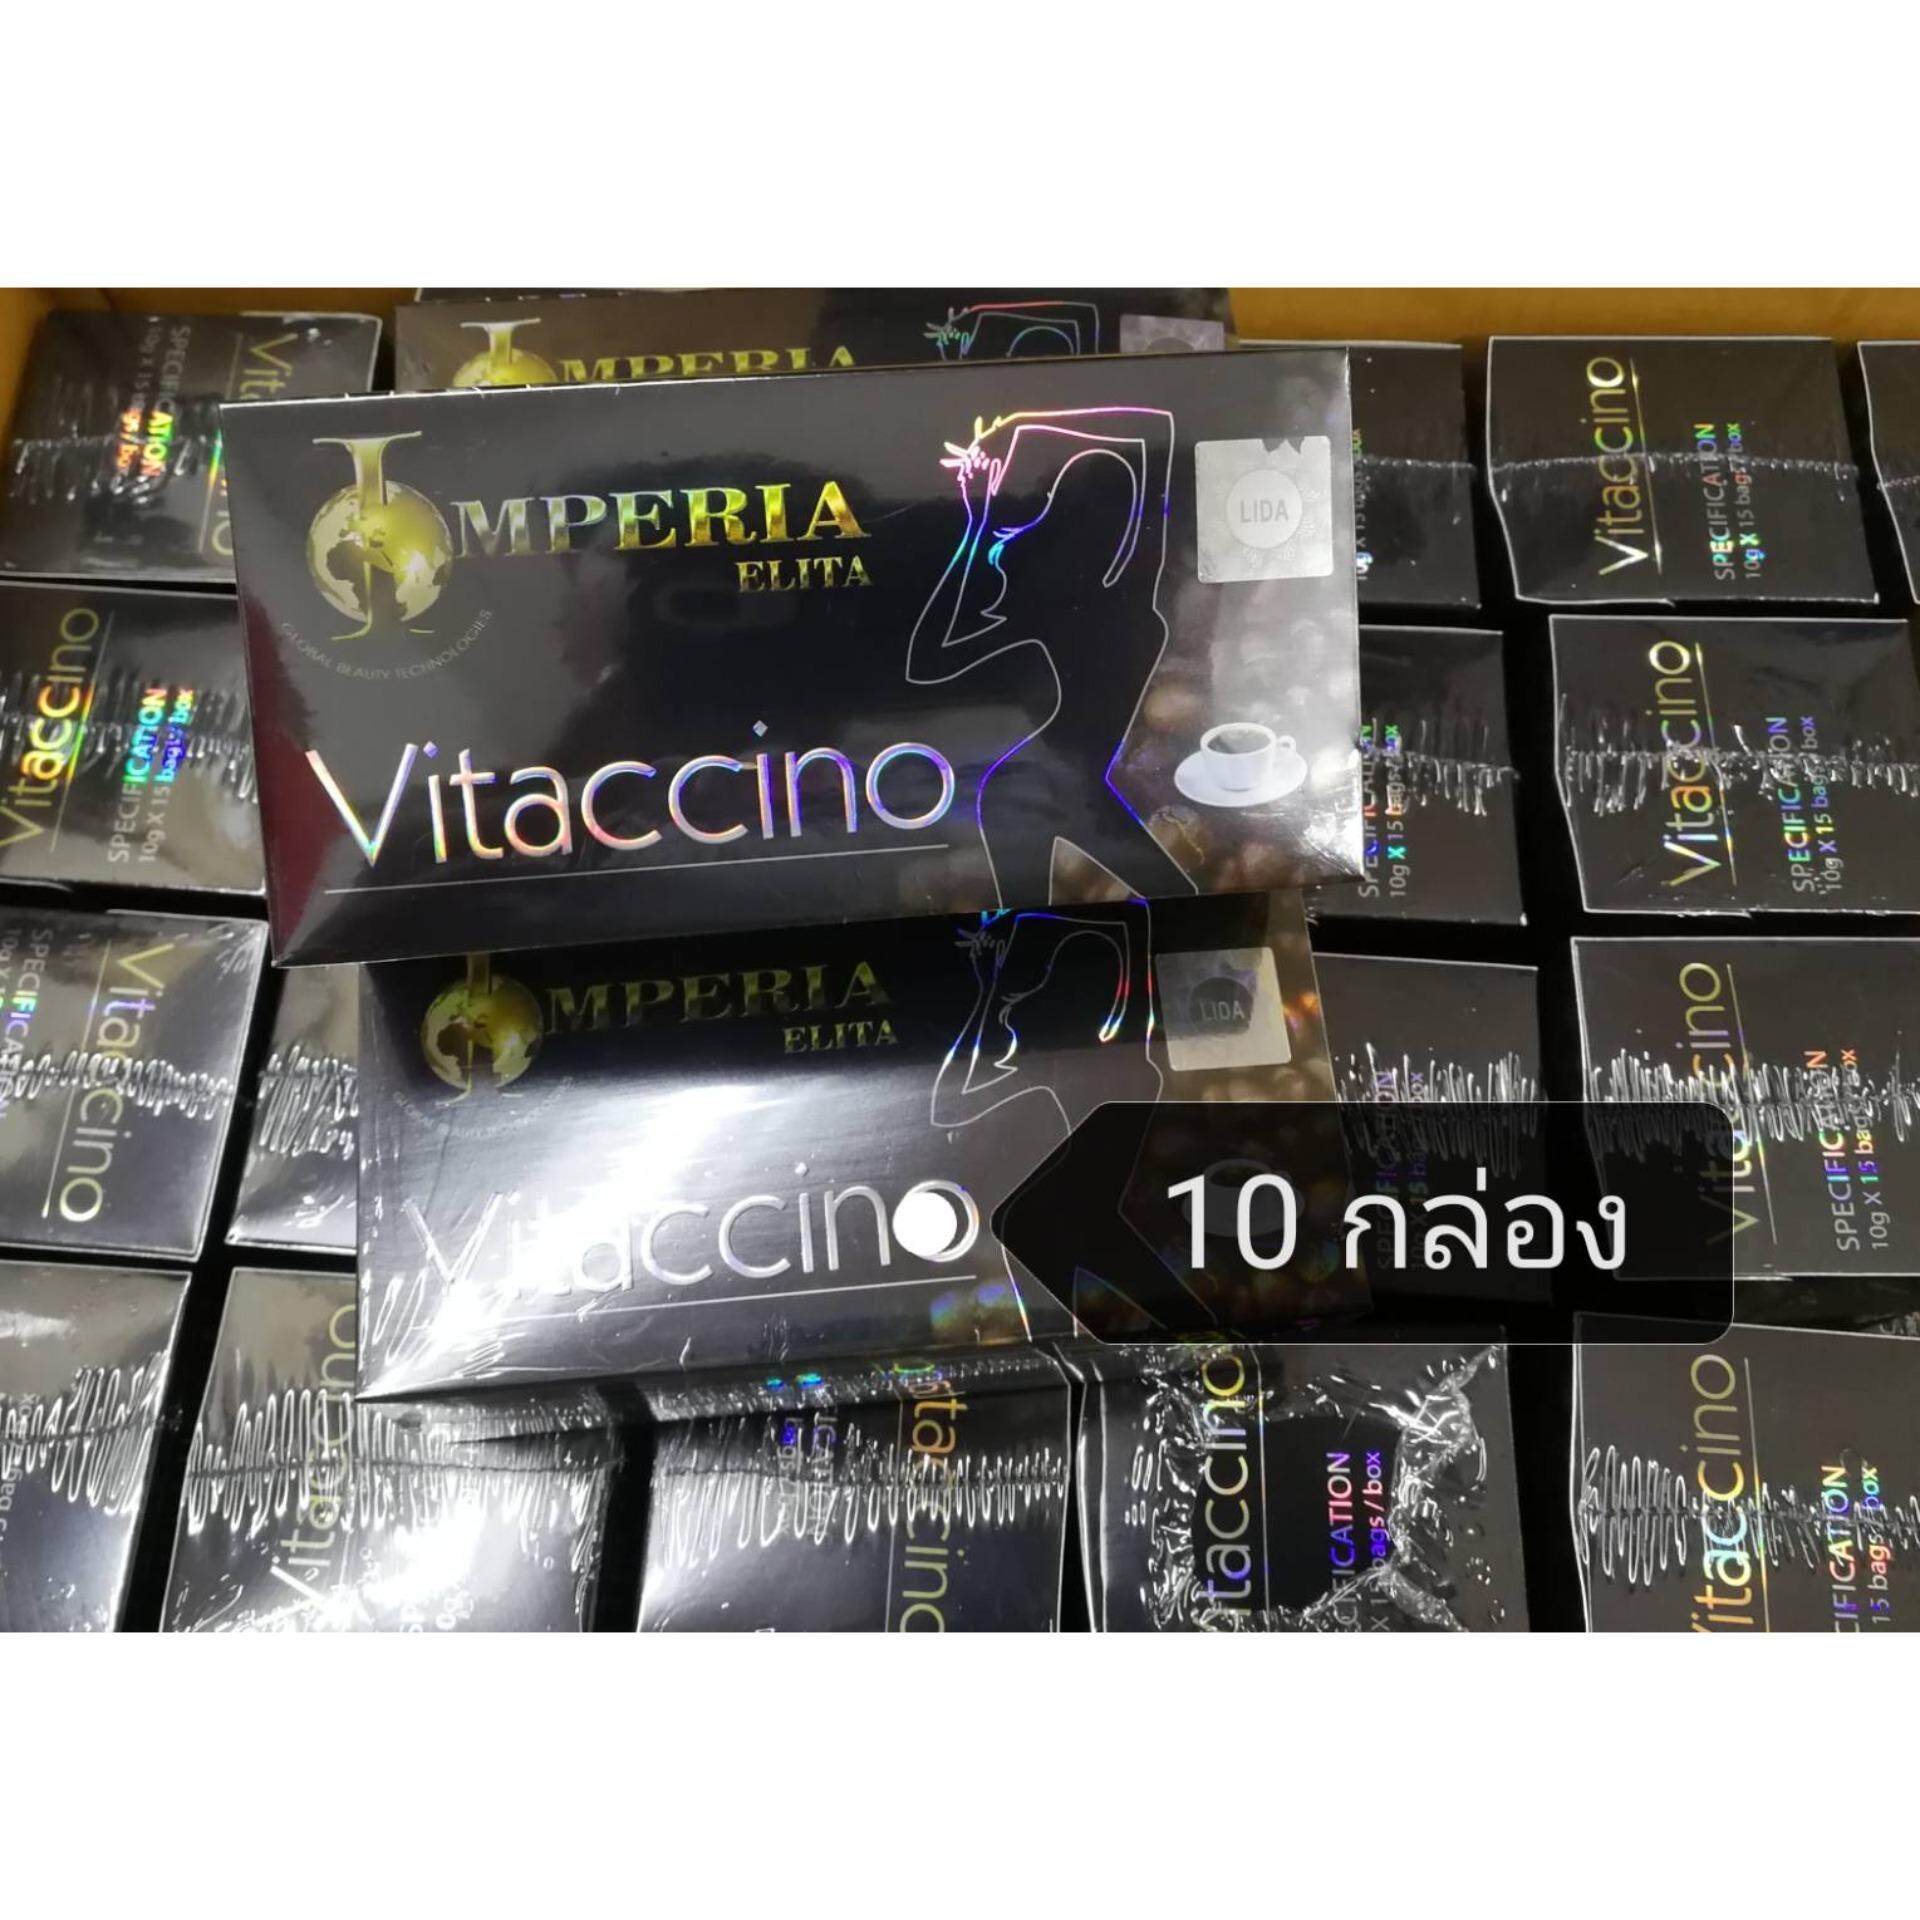 Vitaccino coffee ( 10 กล่อง) เกรดเอ มีสติกเกอร์ LIDA กาแฟลดน้ำหนัก กาแฟดำลดความอ้วน ไวแทคชิโน อีริต้า เฉลี่ย กล่องละ 98 บาท